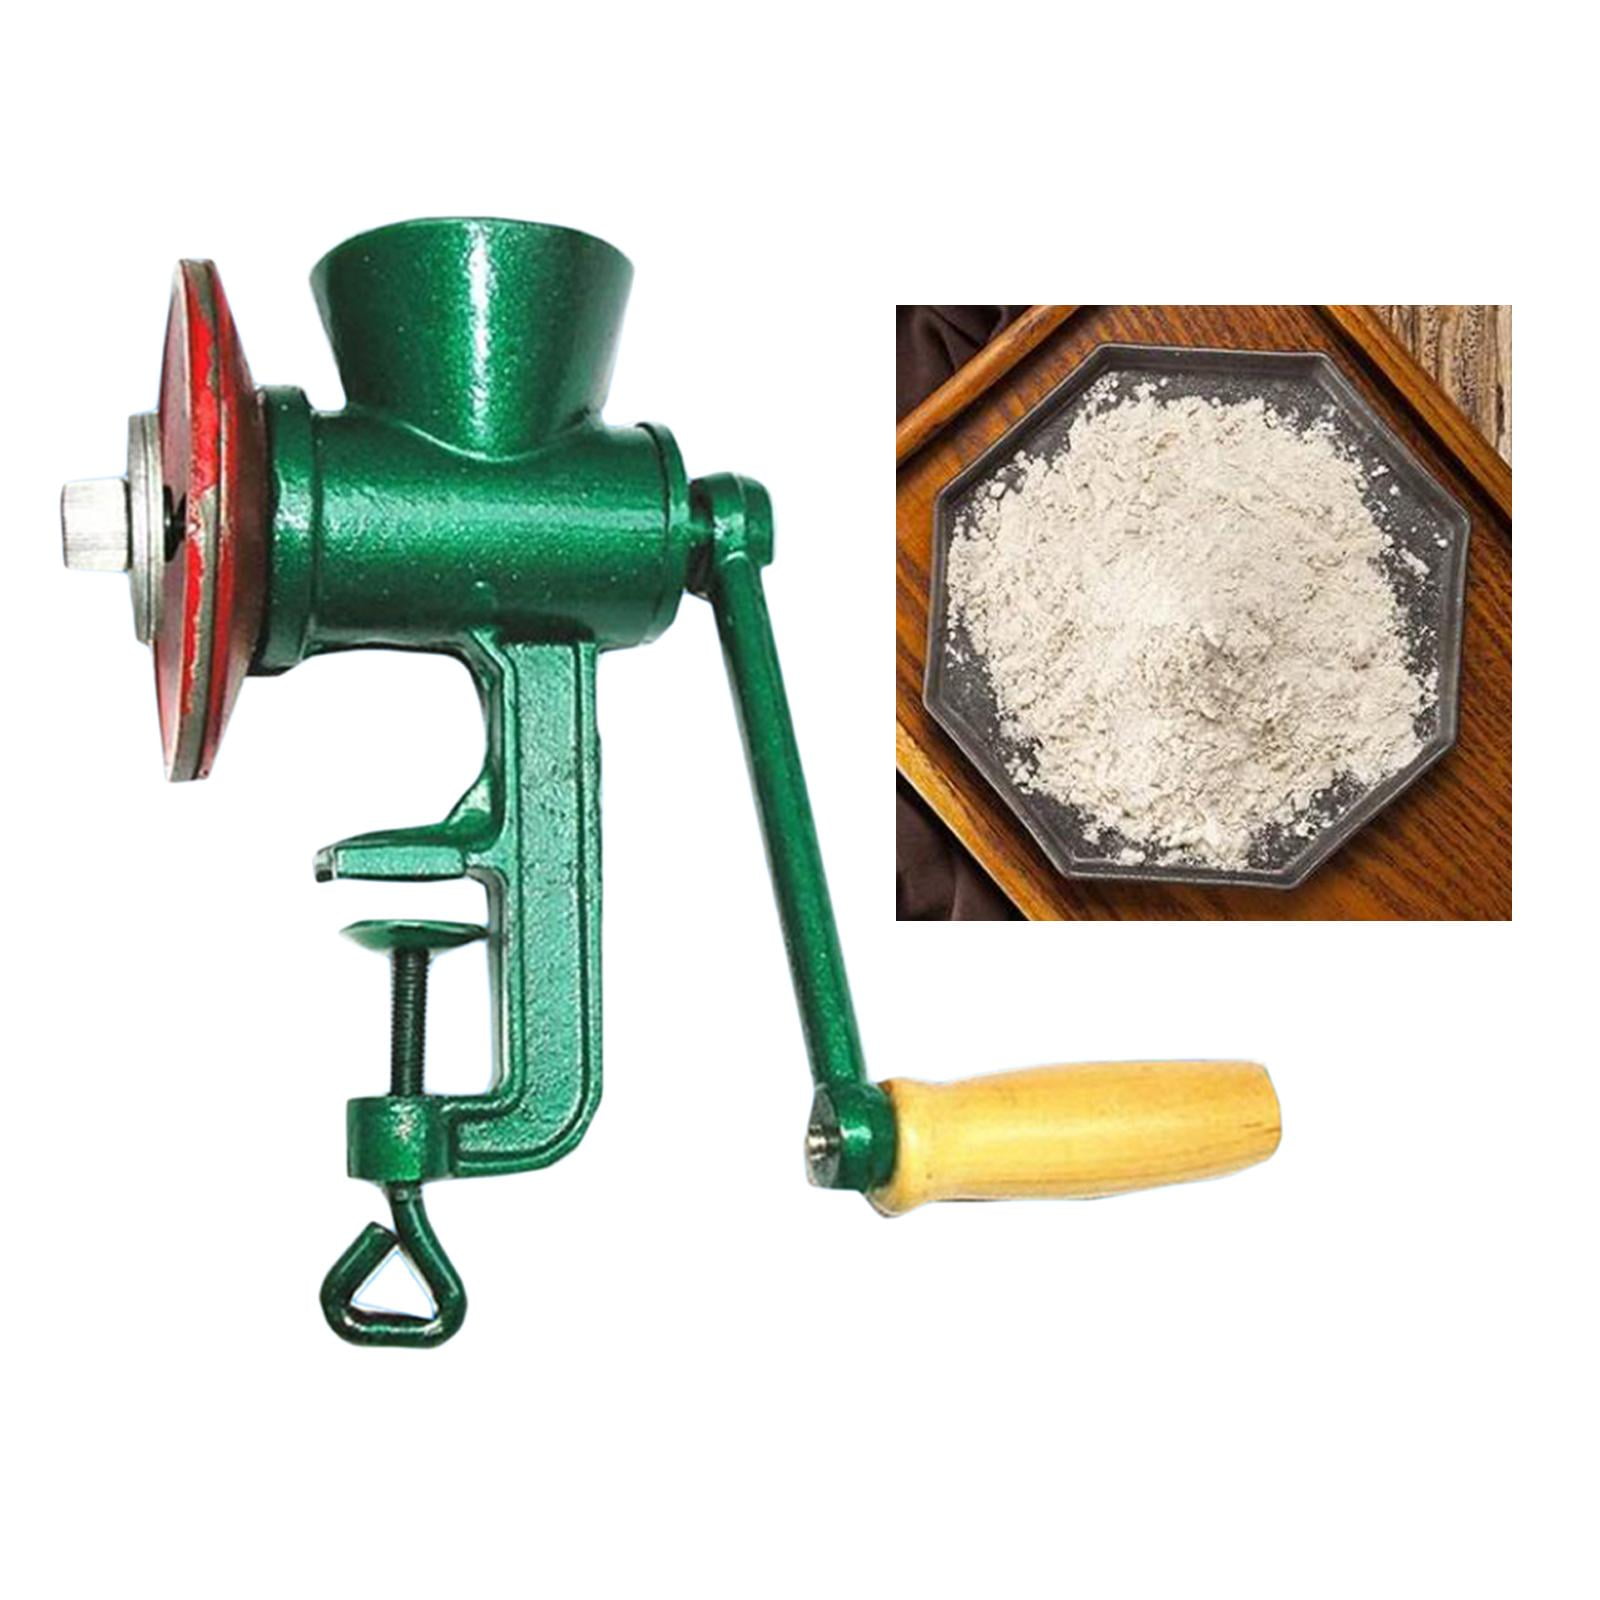 Tohuu Salt Grinder Manual Flax Seed Grinder Pepper Mill Adjustable  Coarseness Household Grinding Bottle Hand Crank Spice Mill suitable 